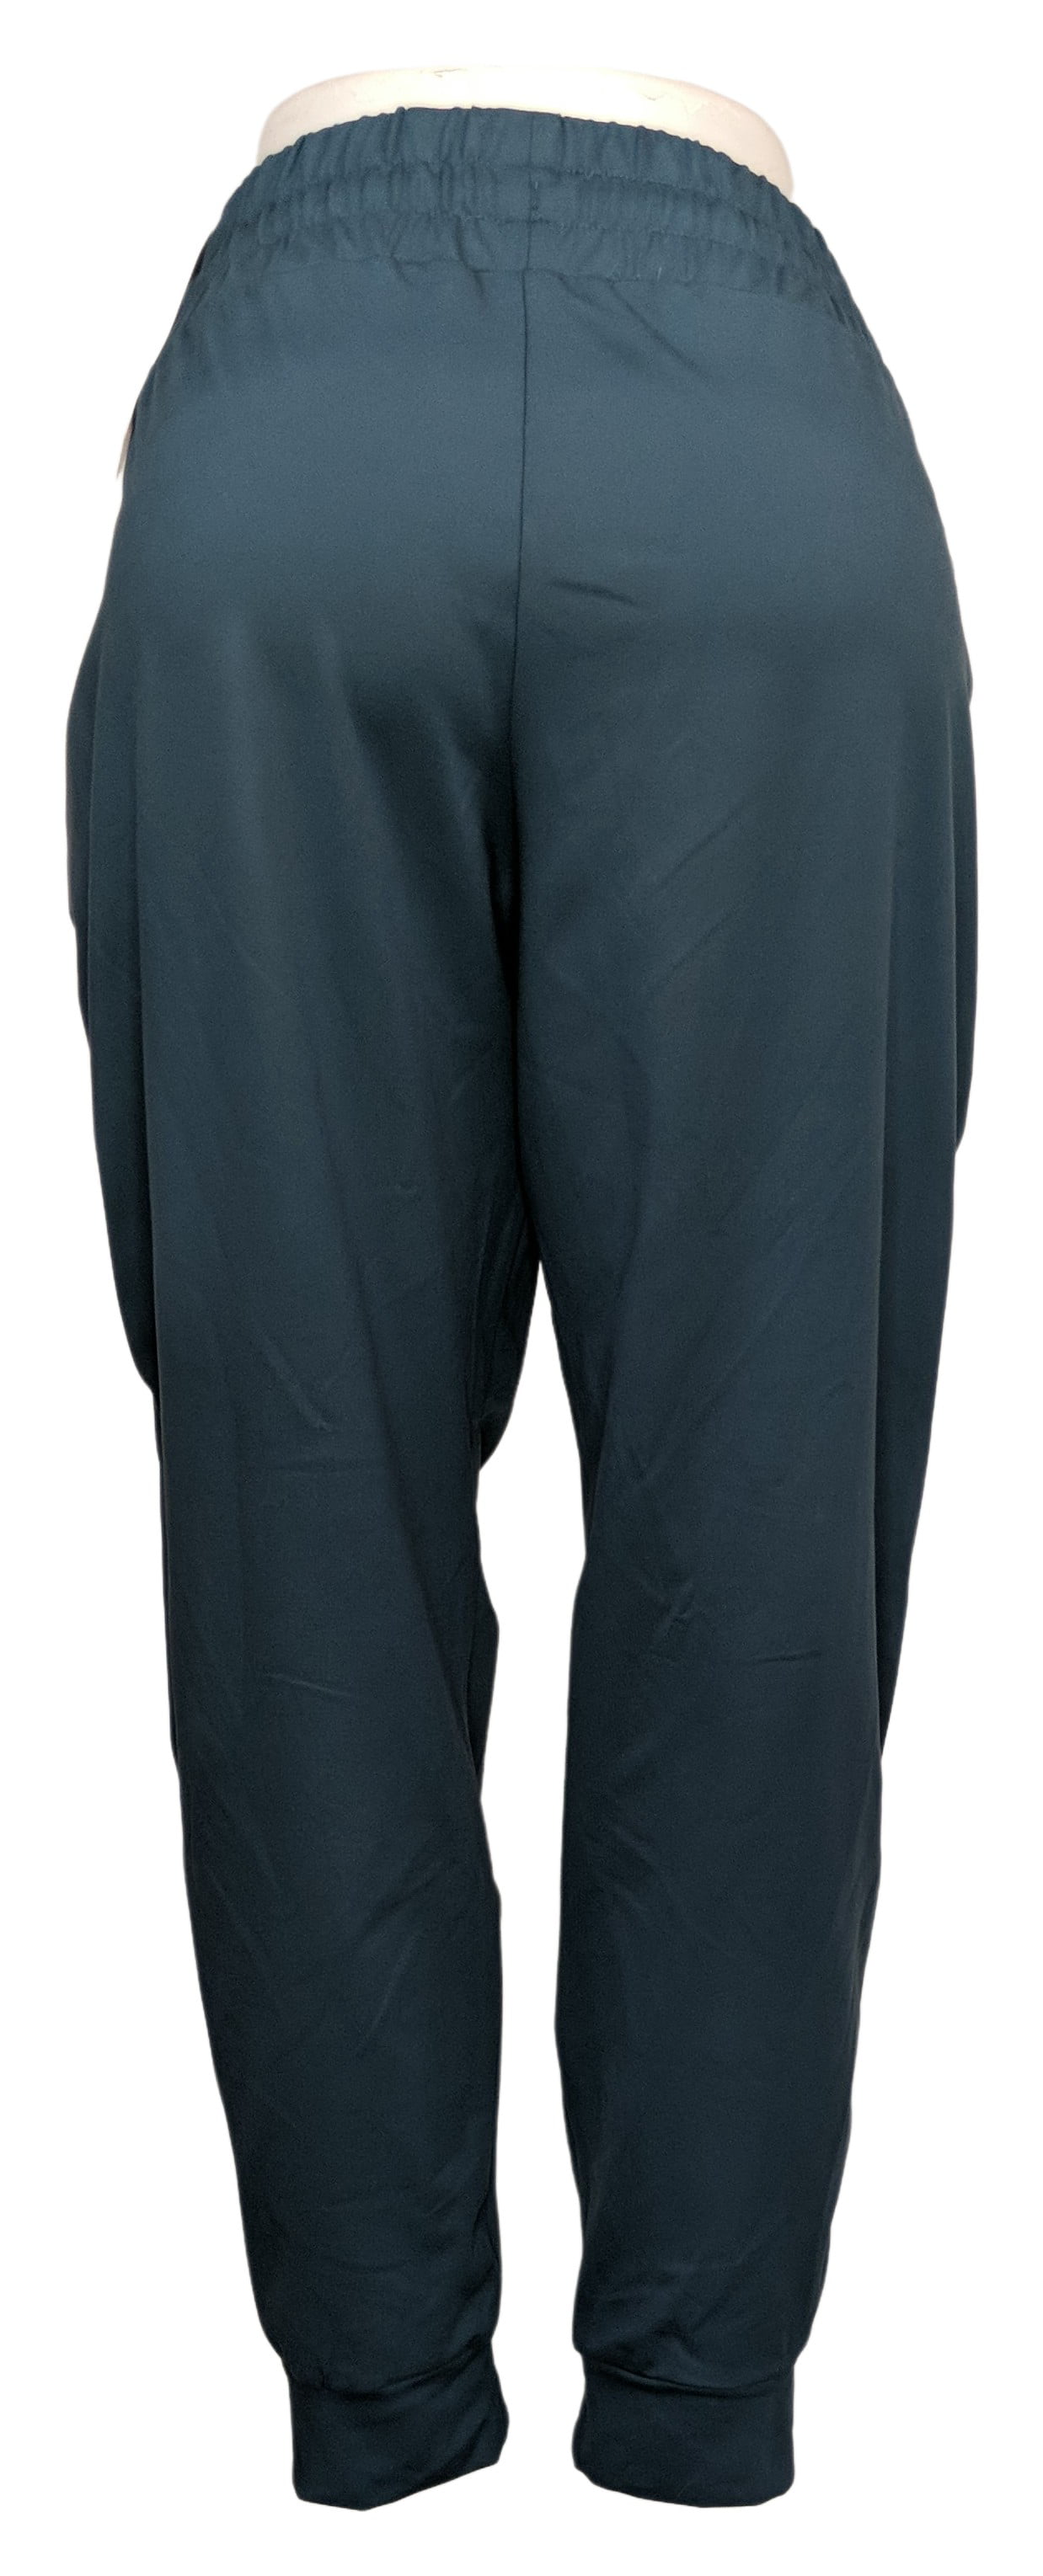 Mondetta Ladies' Moisture Wicking Ultra-Soft Jogger Pants Color: Midnight  Navy, Size: XL 